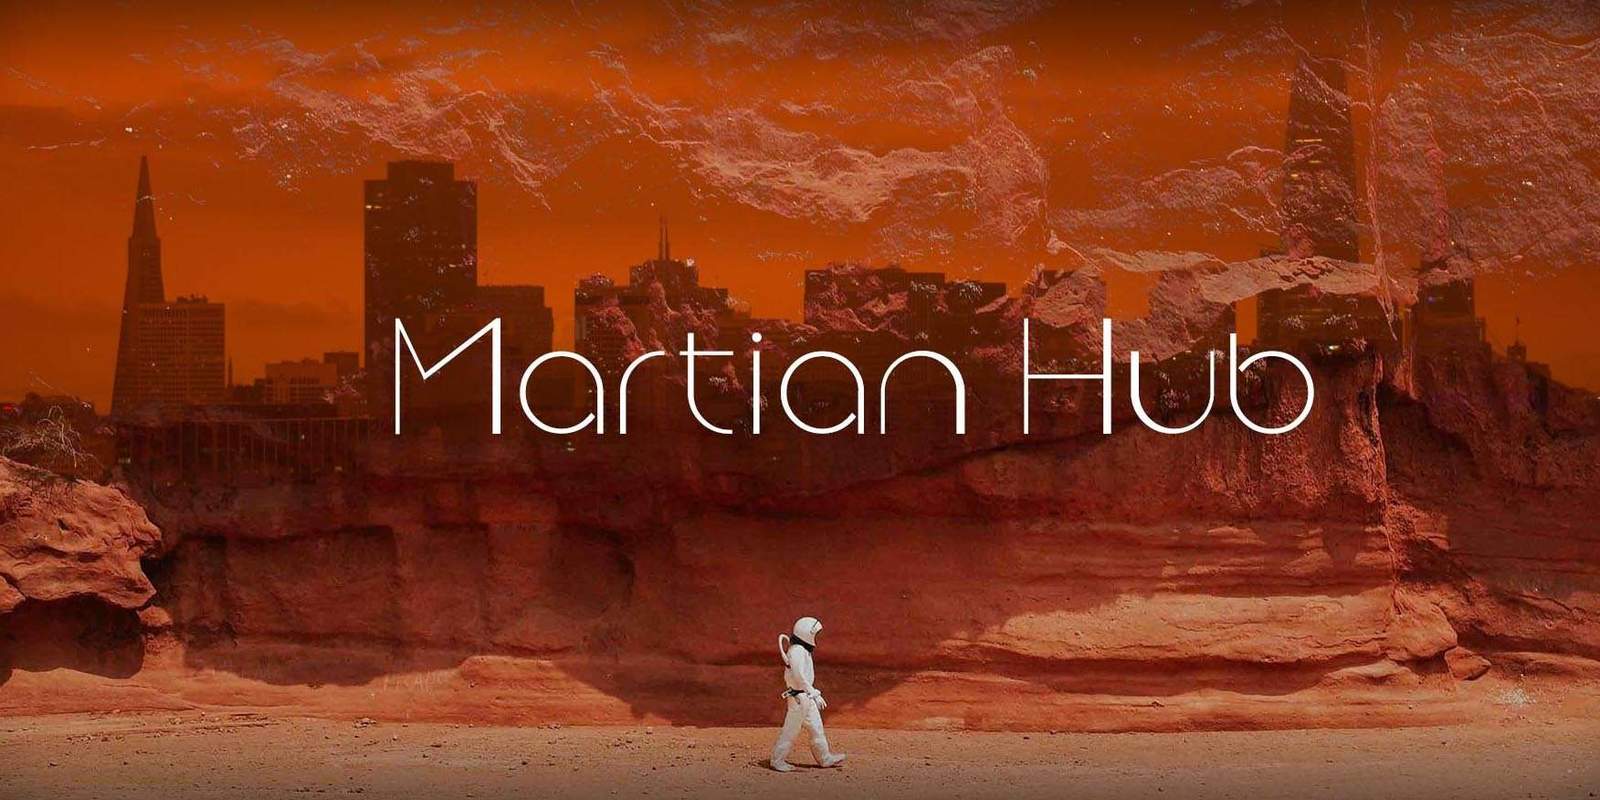 Martian Hub - Mars Housing Colony Design Challenge